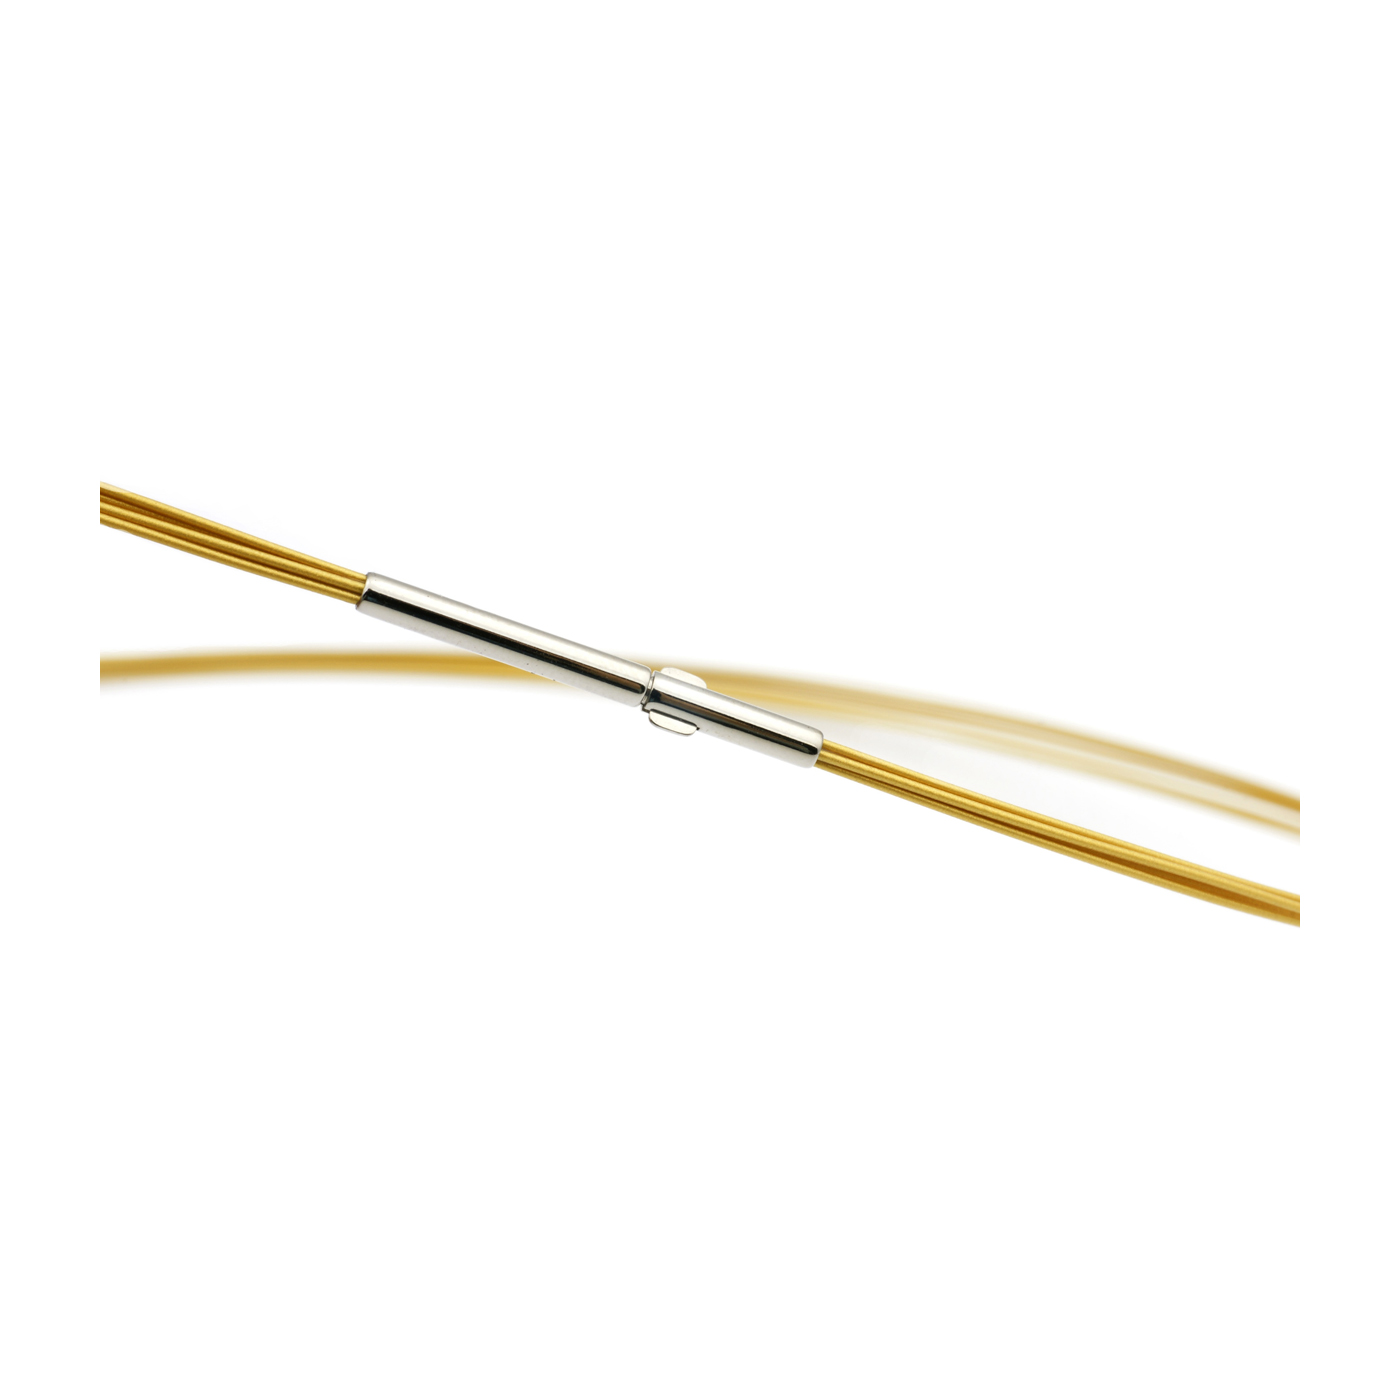 Seilcollier "Colour Cable", ES, gold metallic, 5-reihig,42cm - 1 Stück